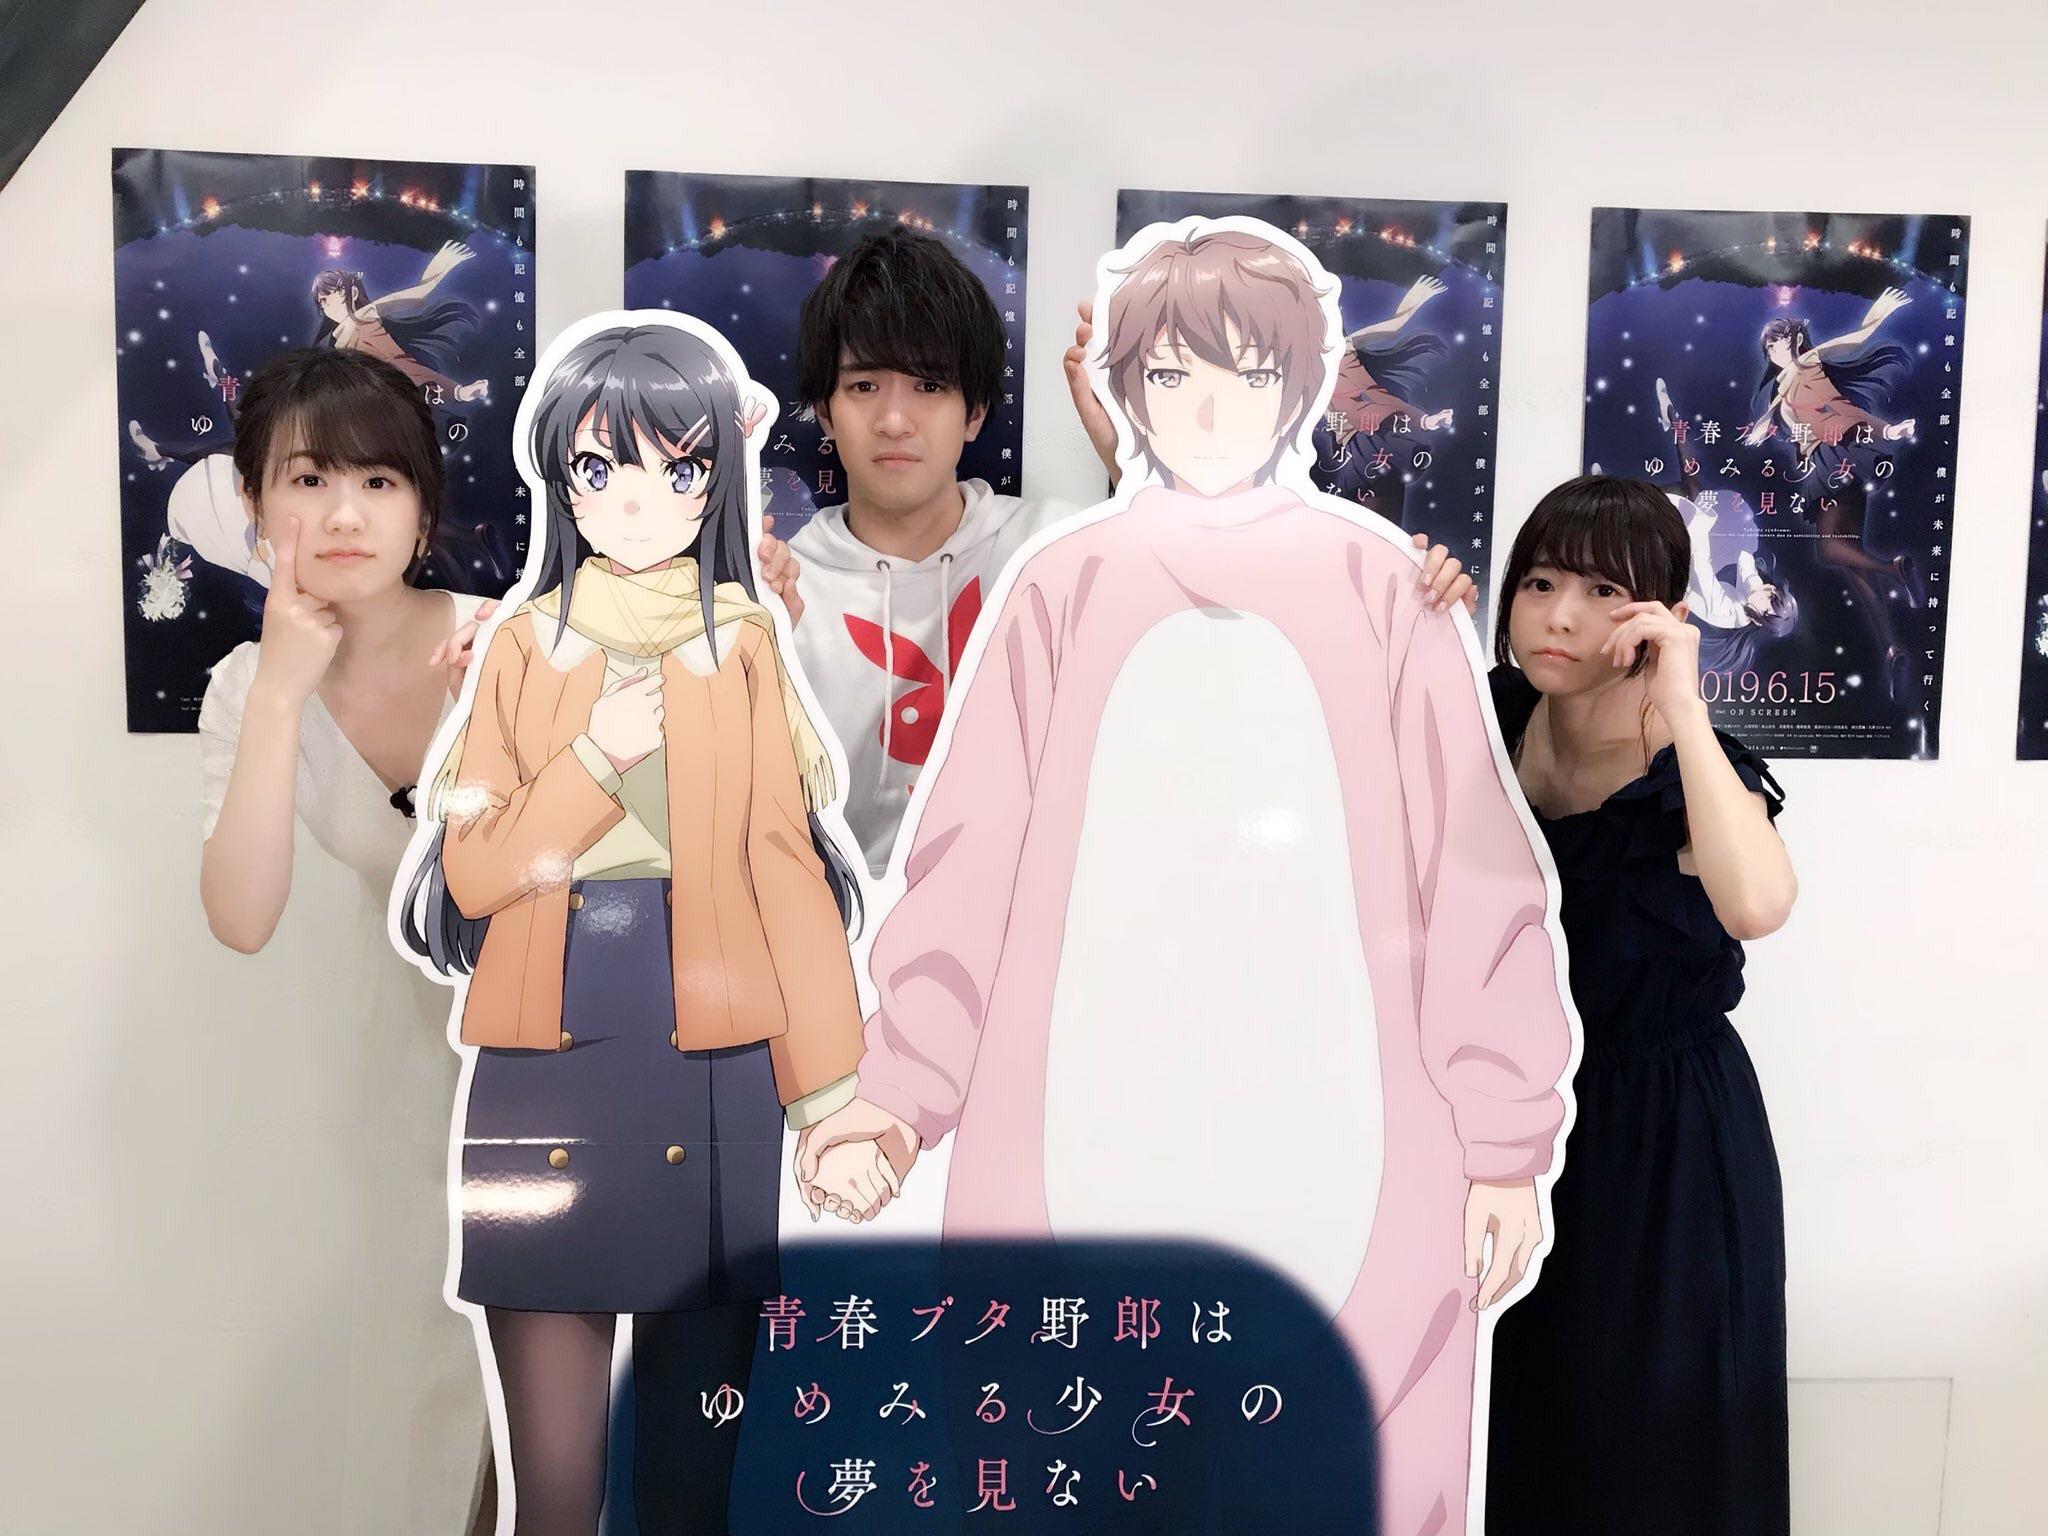 Sad Aobuta characters with sad Aobuta seiyuus